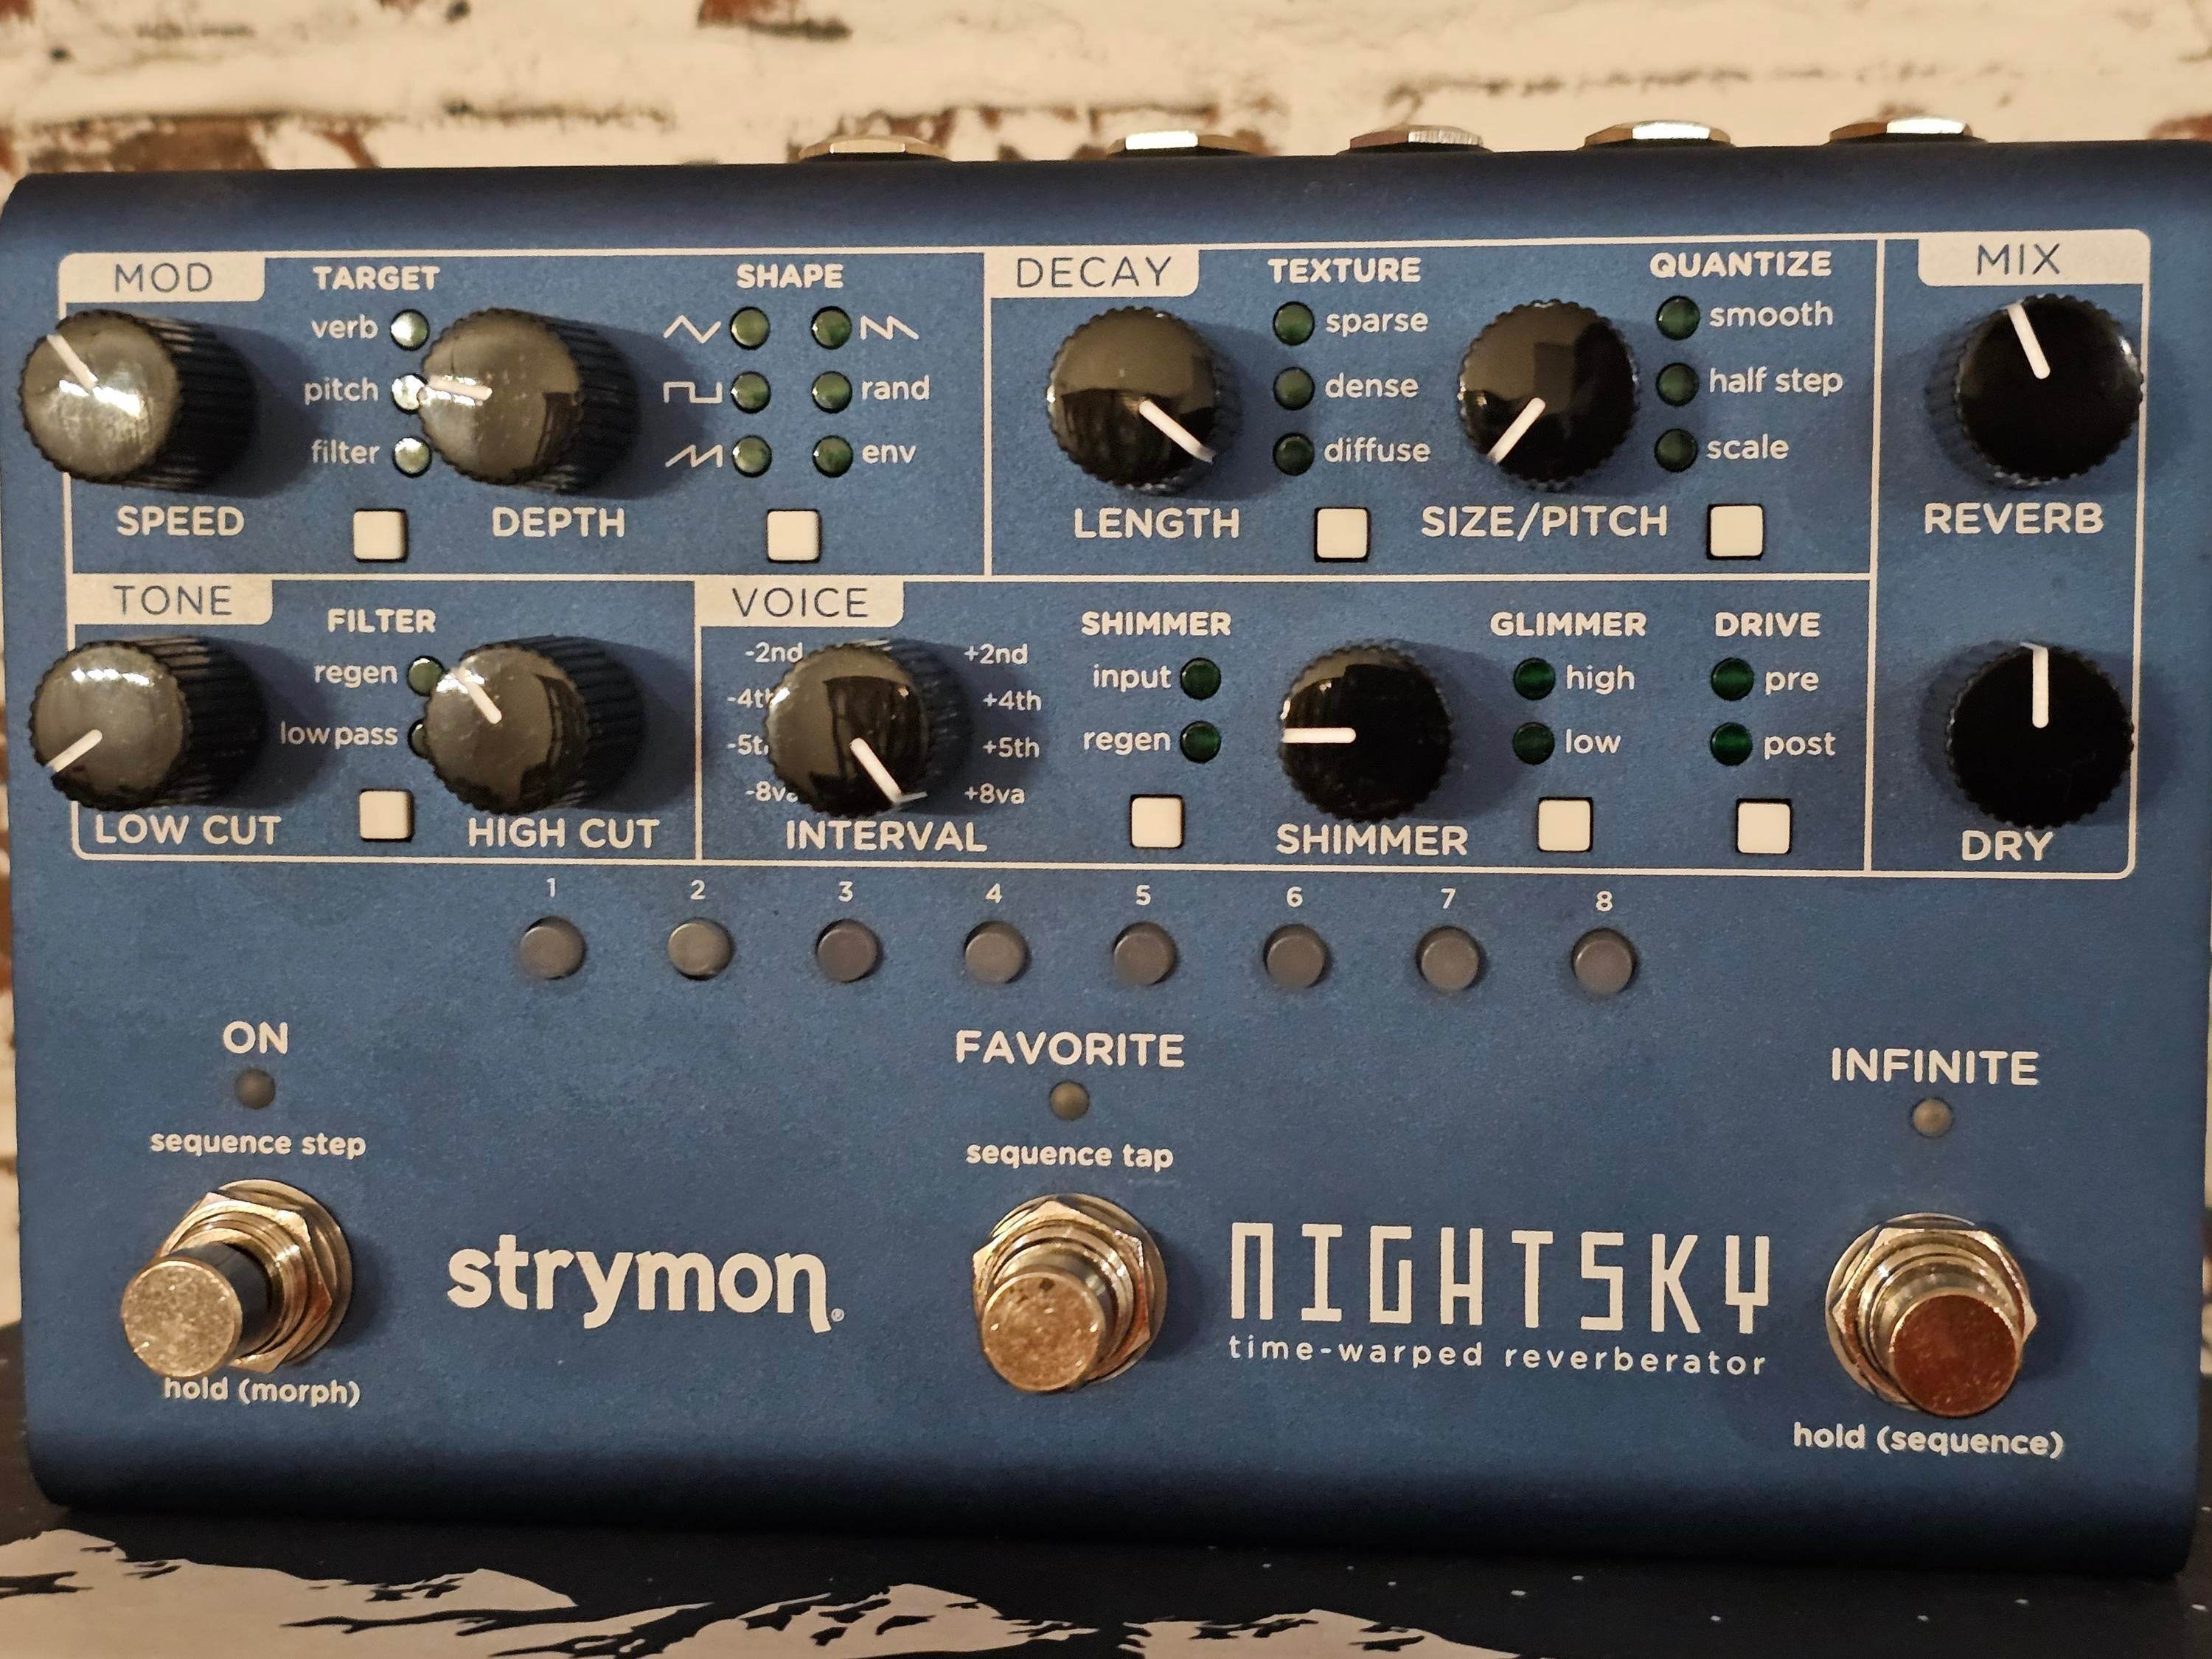 Used Strymon NightSky Time-warped Reverberator Pedal